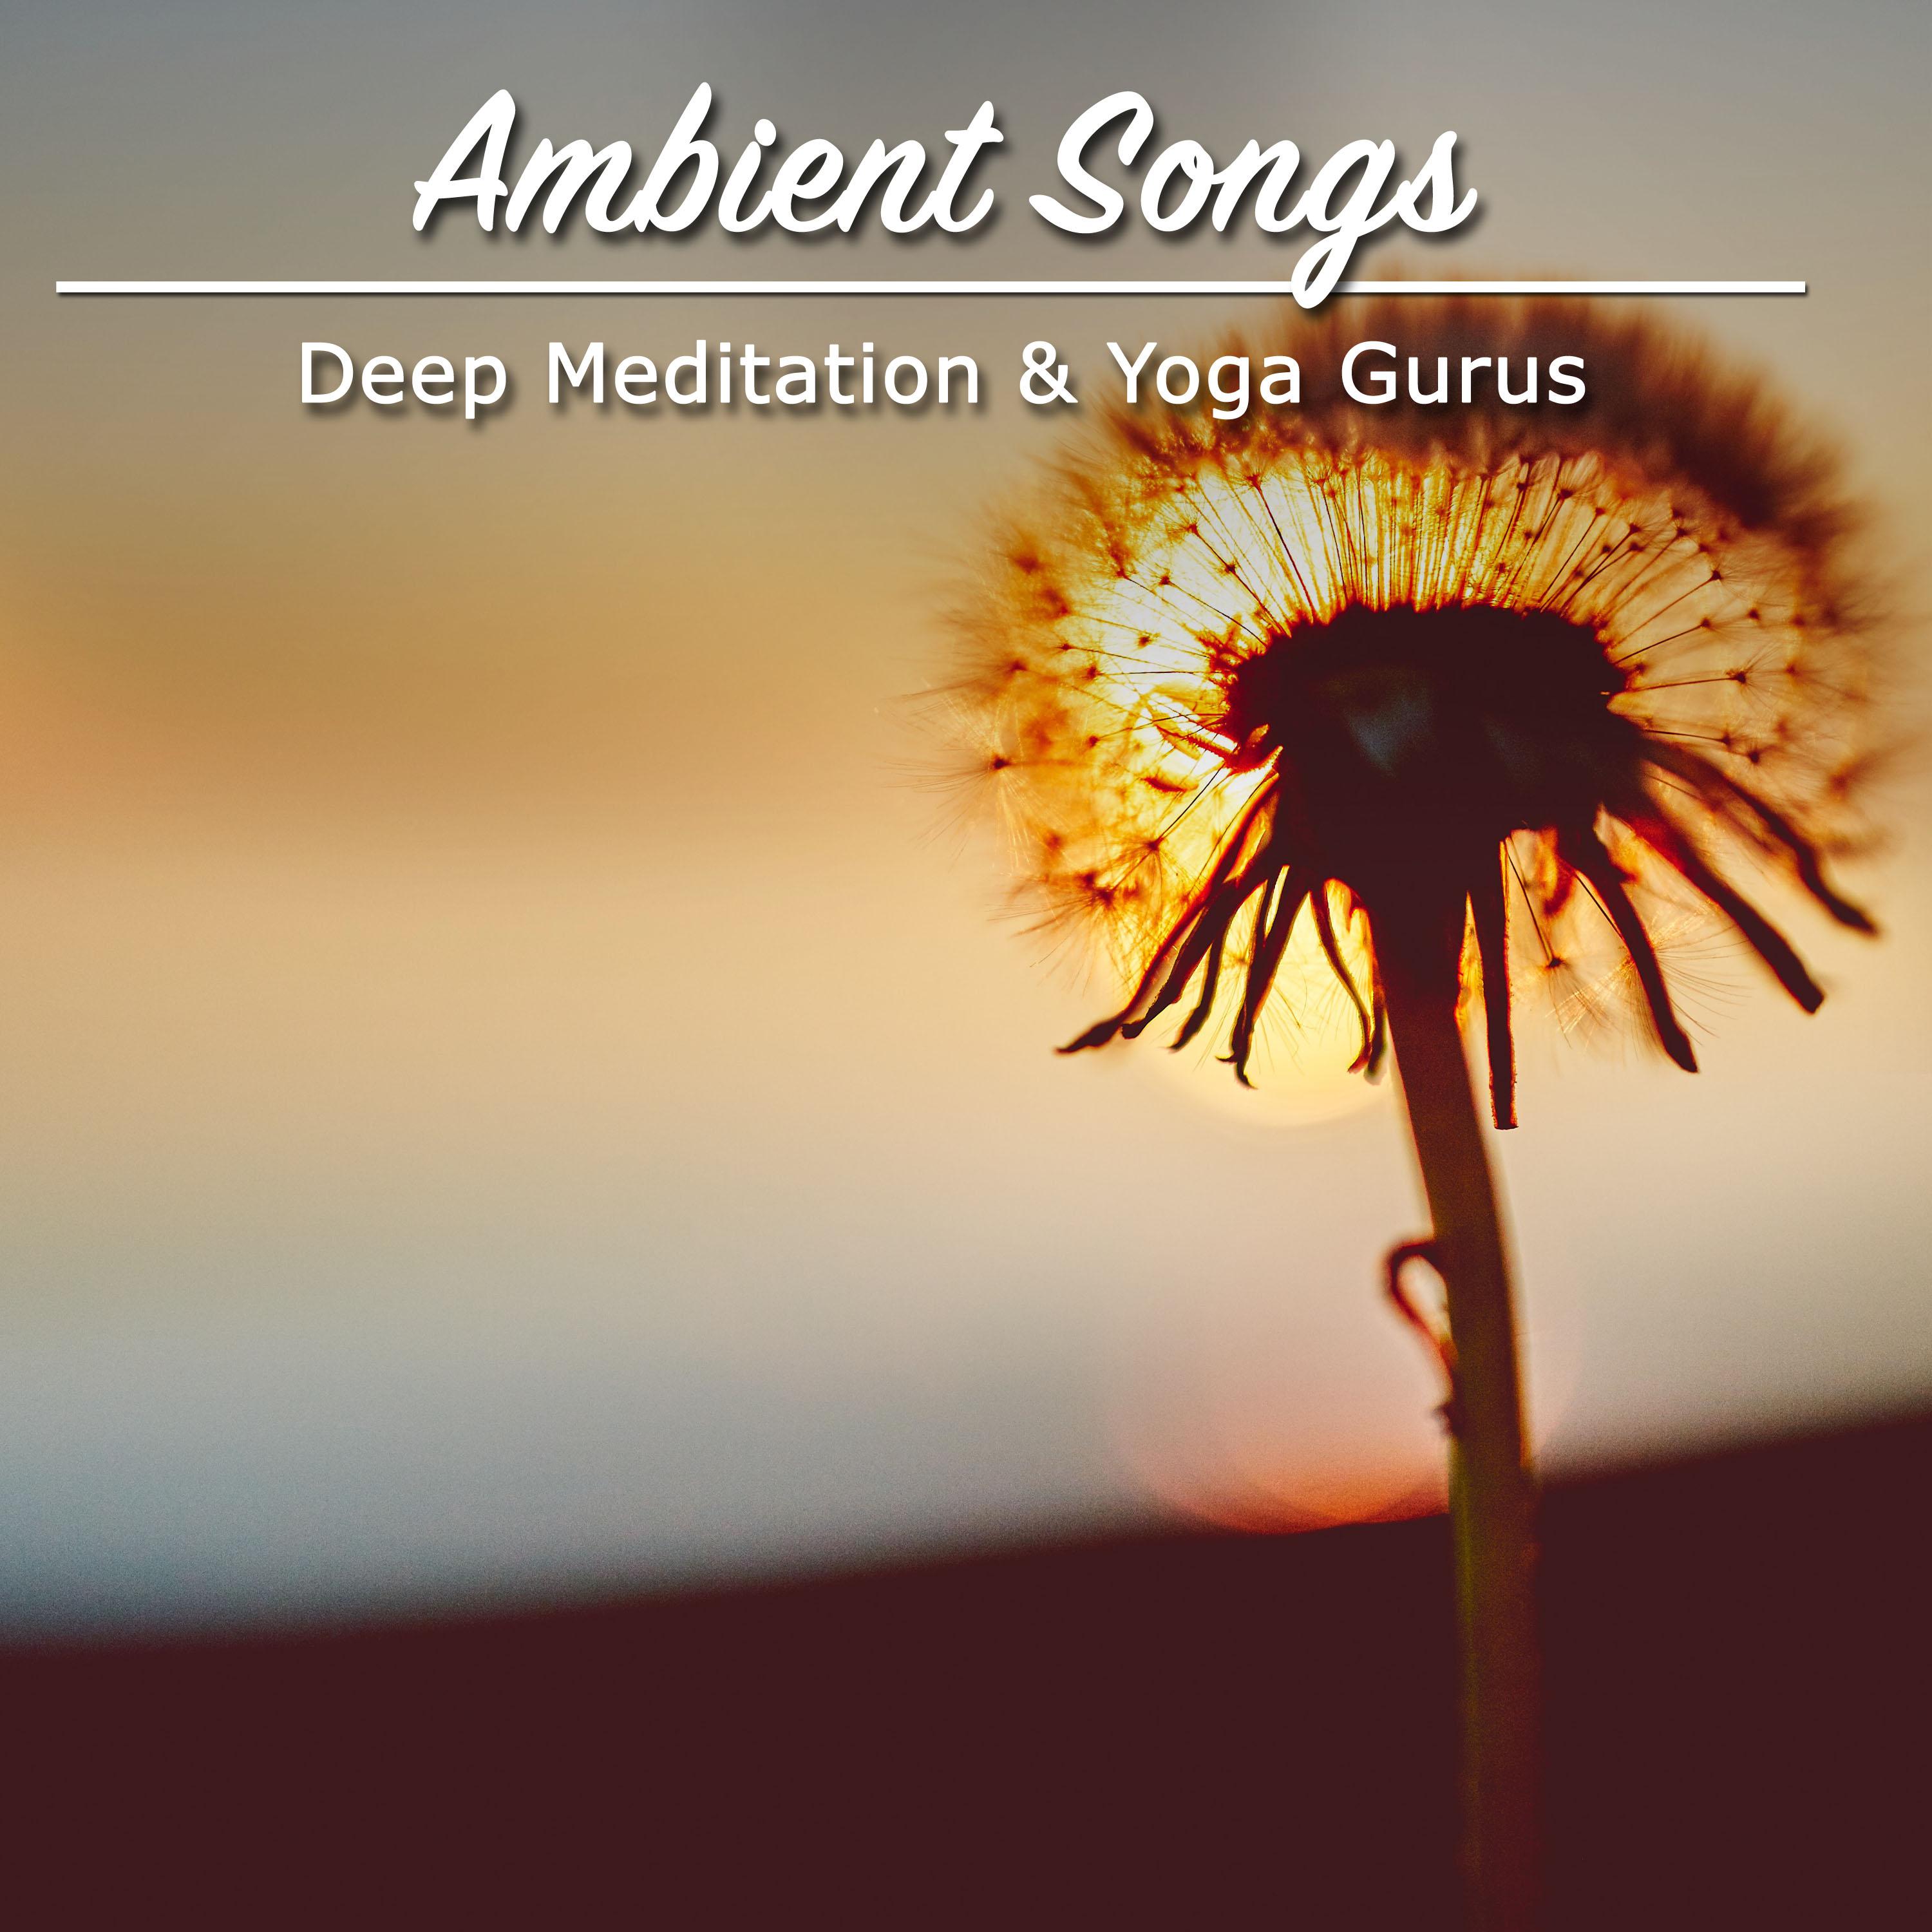 15 Ambient Songs for Deep Meditation & Yoga Gurus